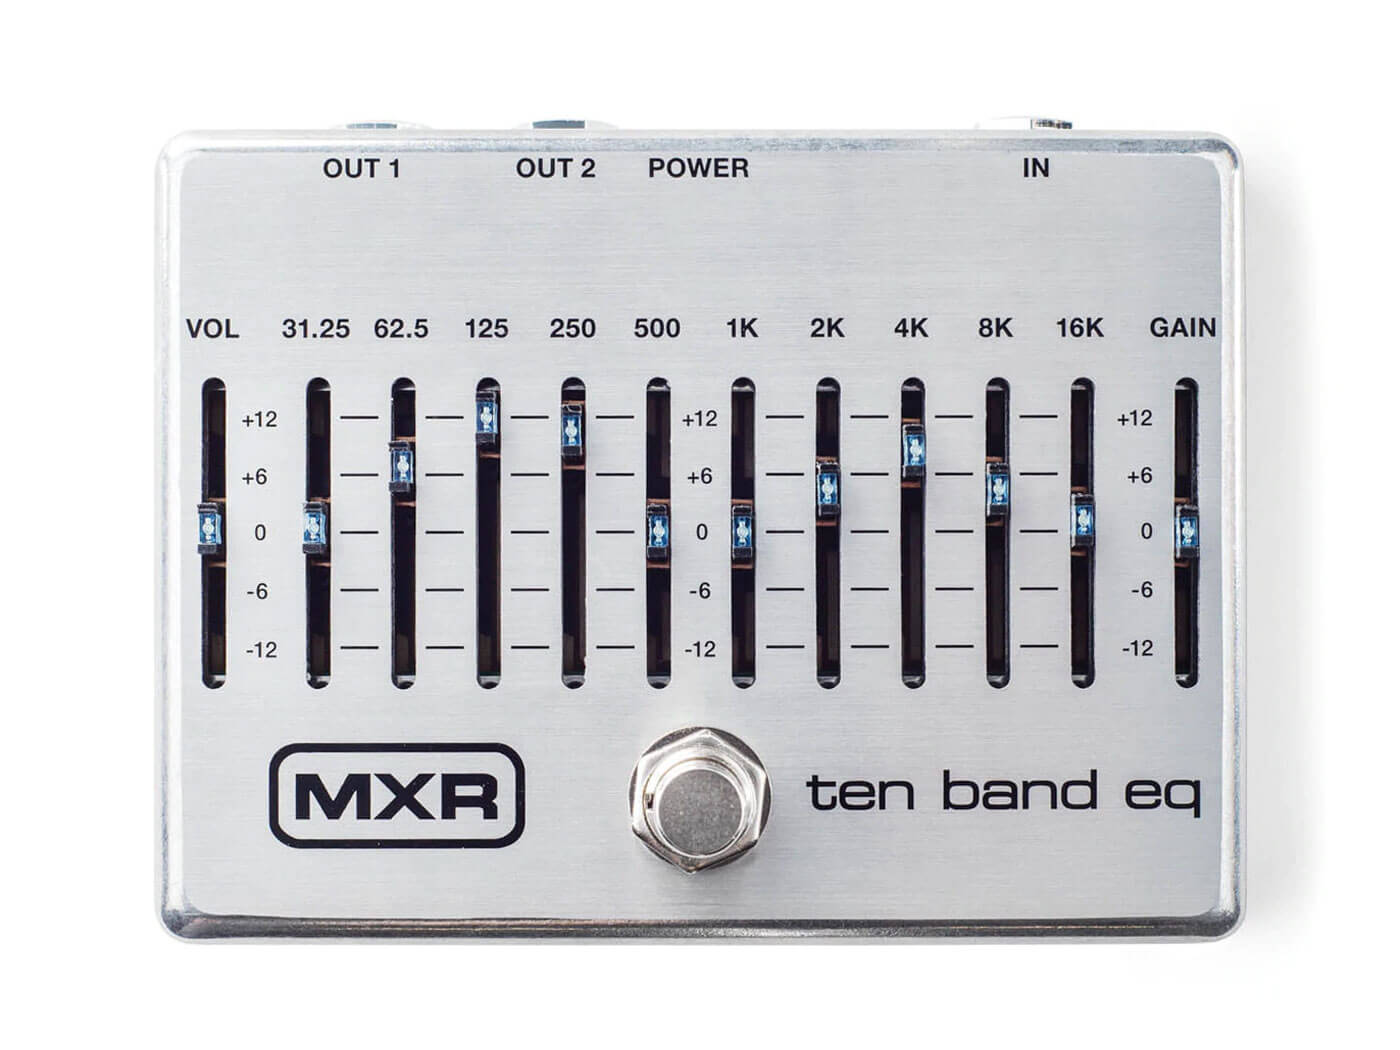 The MXR Ten Band EQ